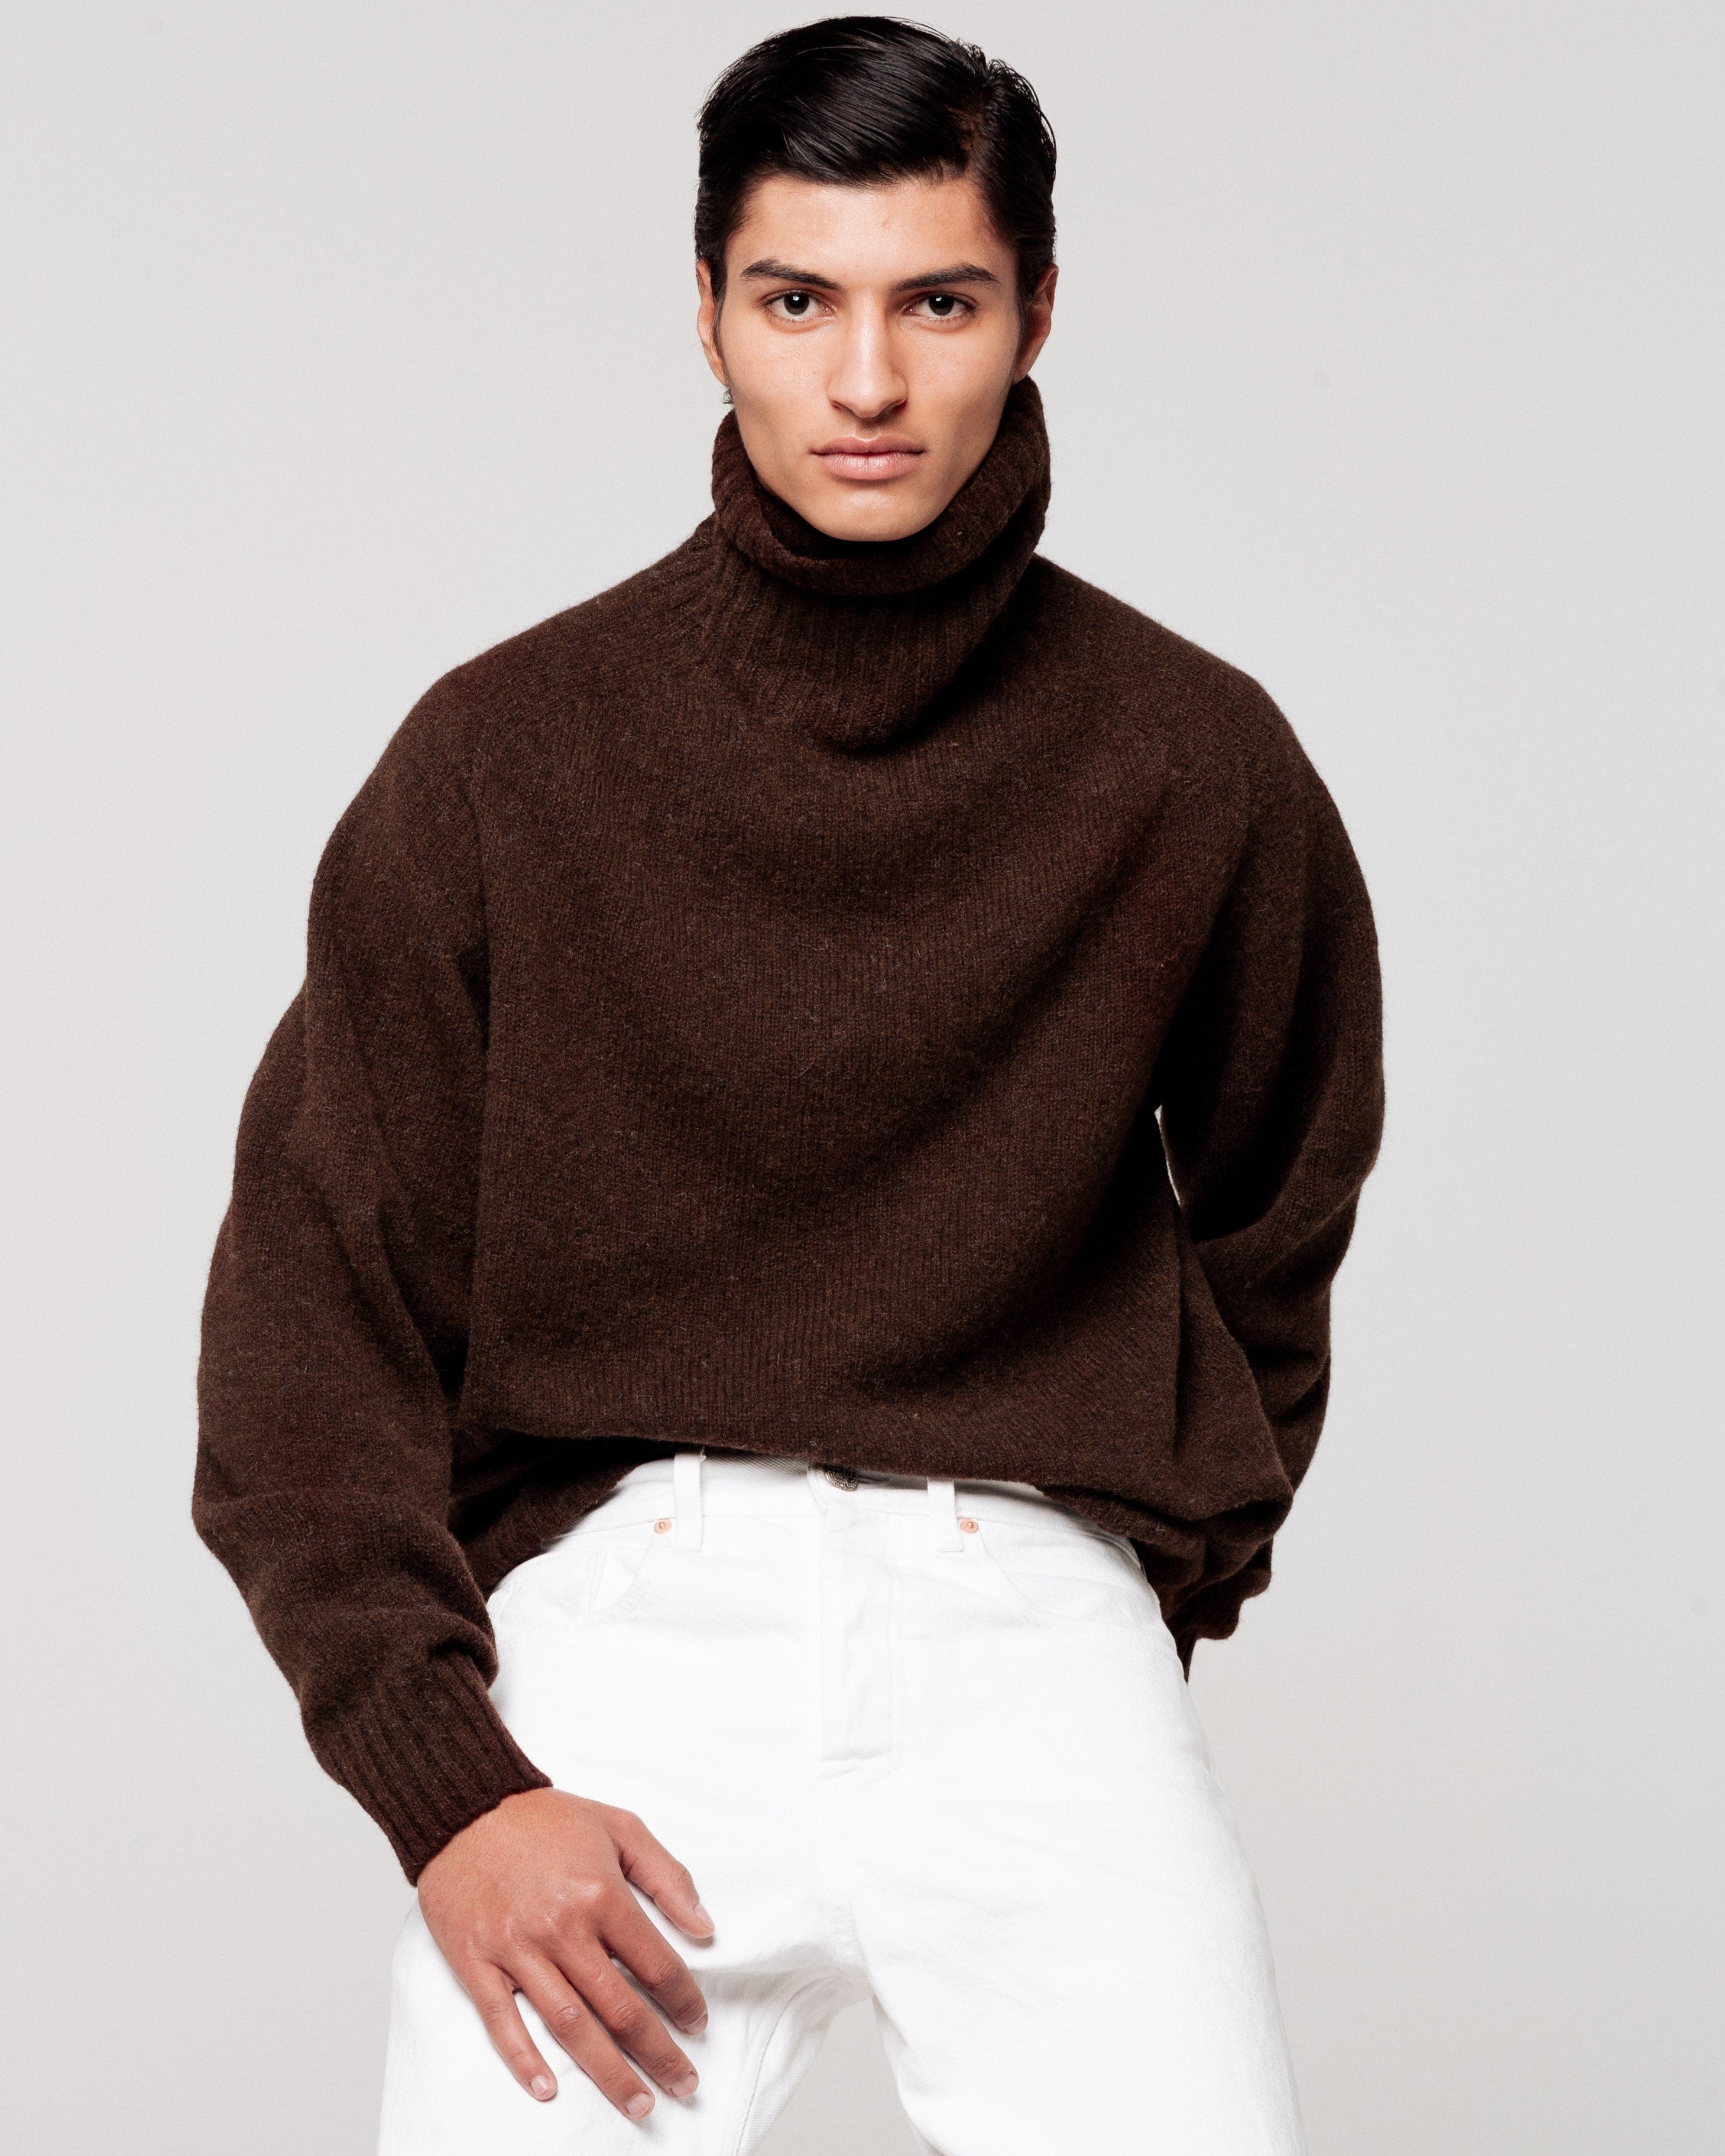 Tenue. Tenue. x Le Bonnet Newman Chocolate Sweater